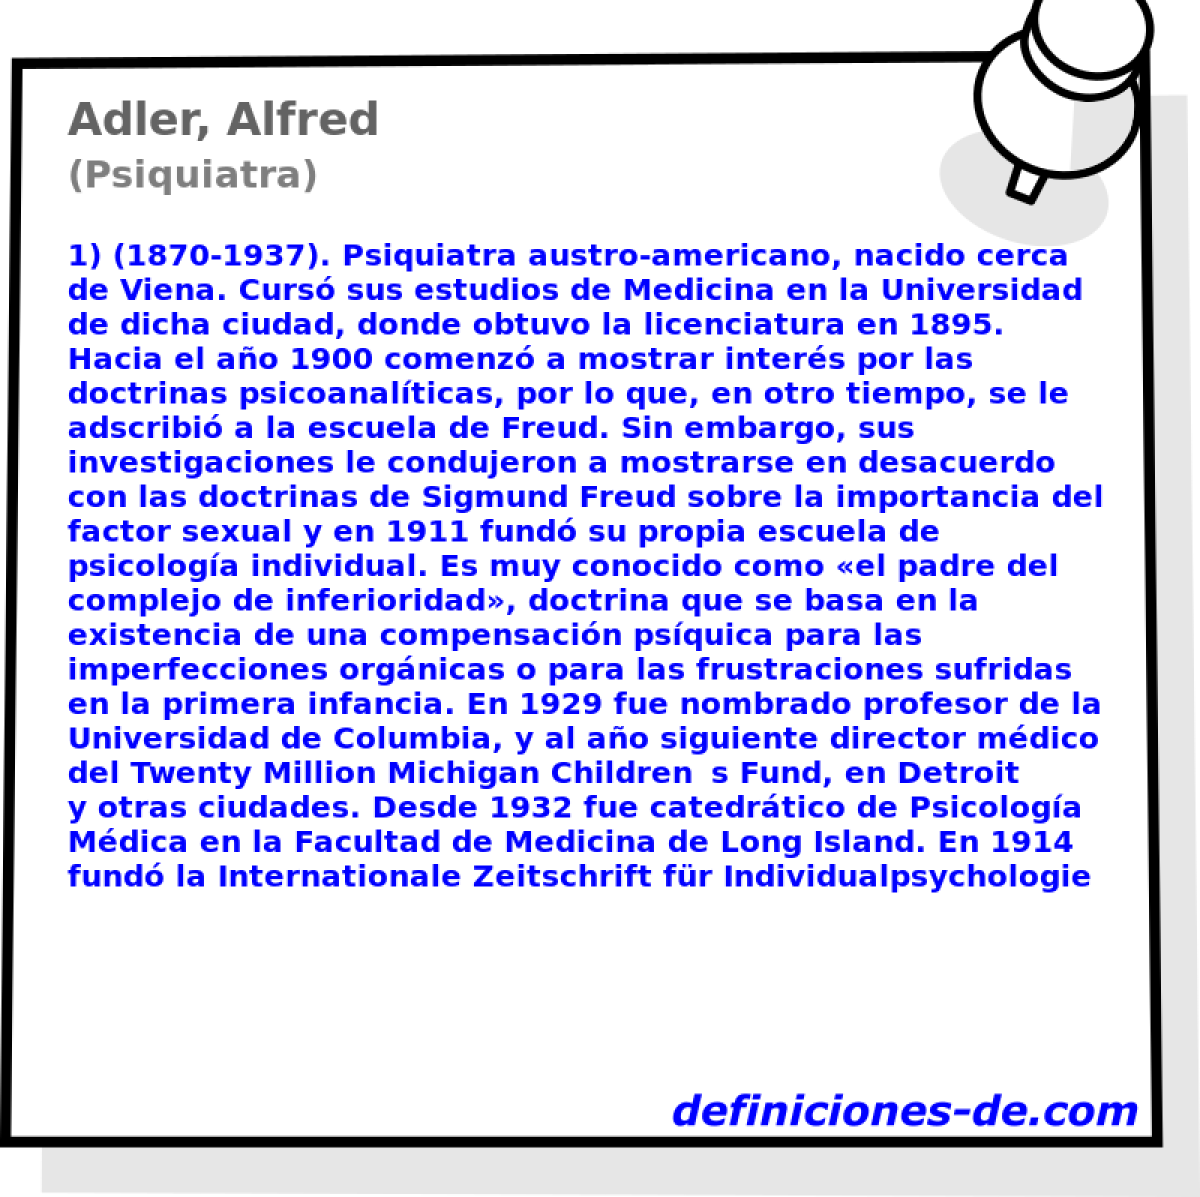 Adler, Alfred (Psiquiatra)